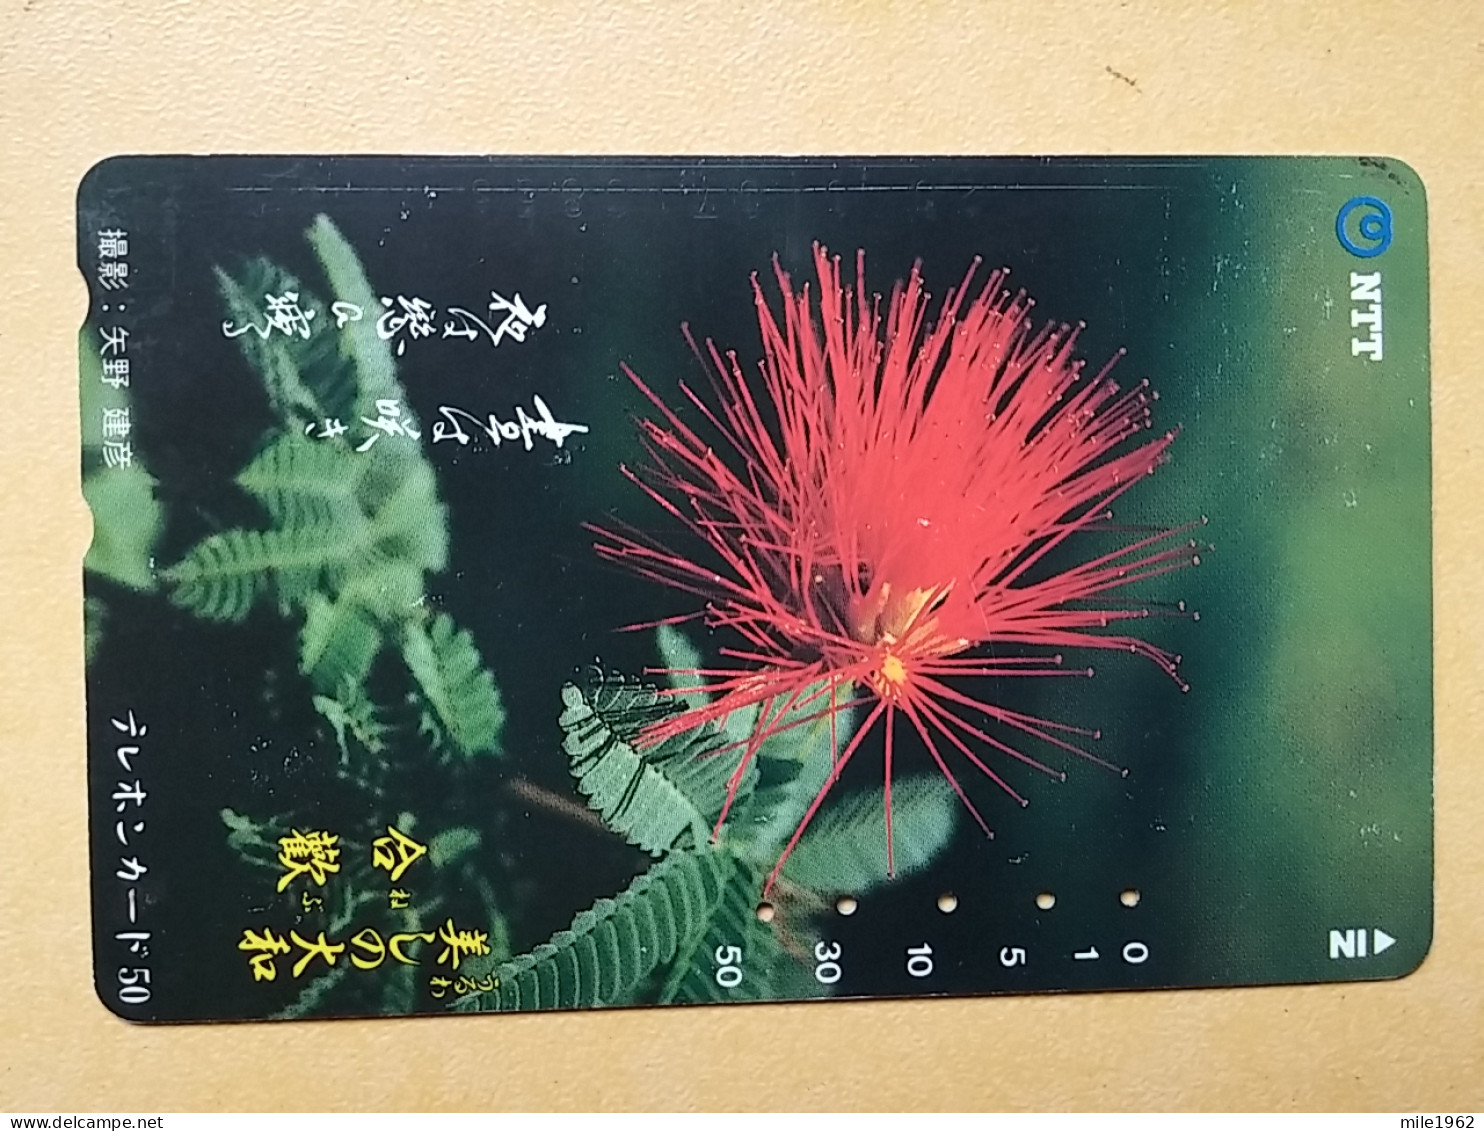 T-383 - JAPAN, Japon, Nipon, TELECARD, PHONECARD, Flower, Fleur, NTT 331-141 - Flores